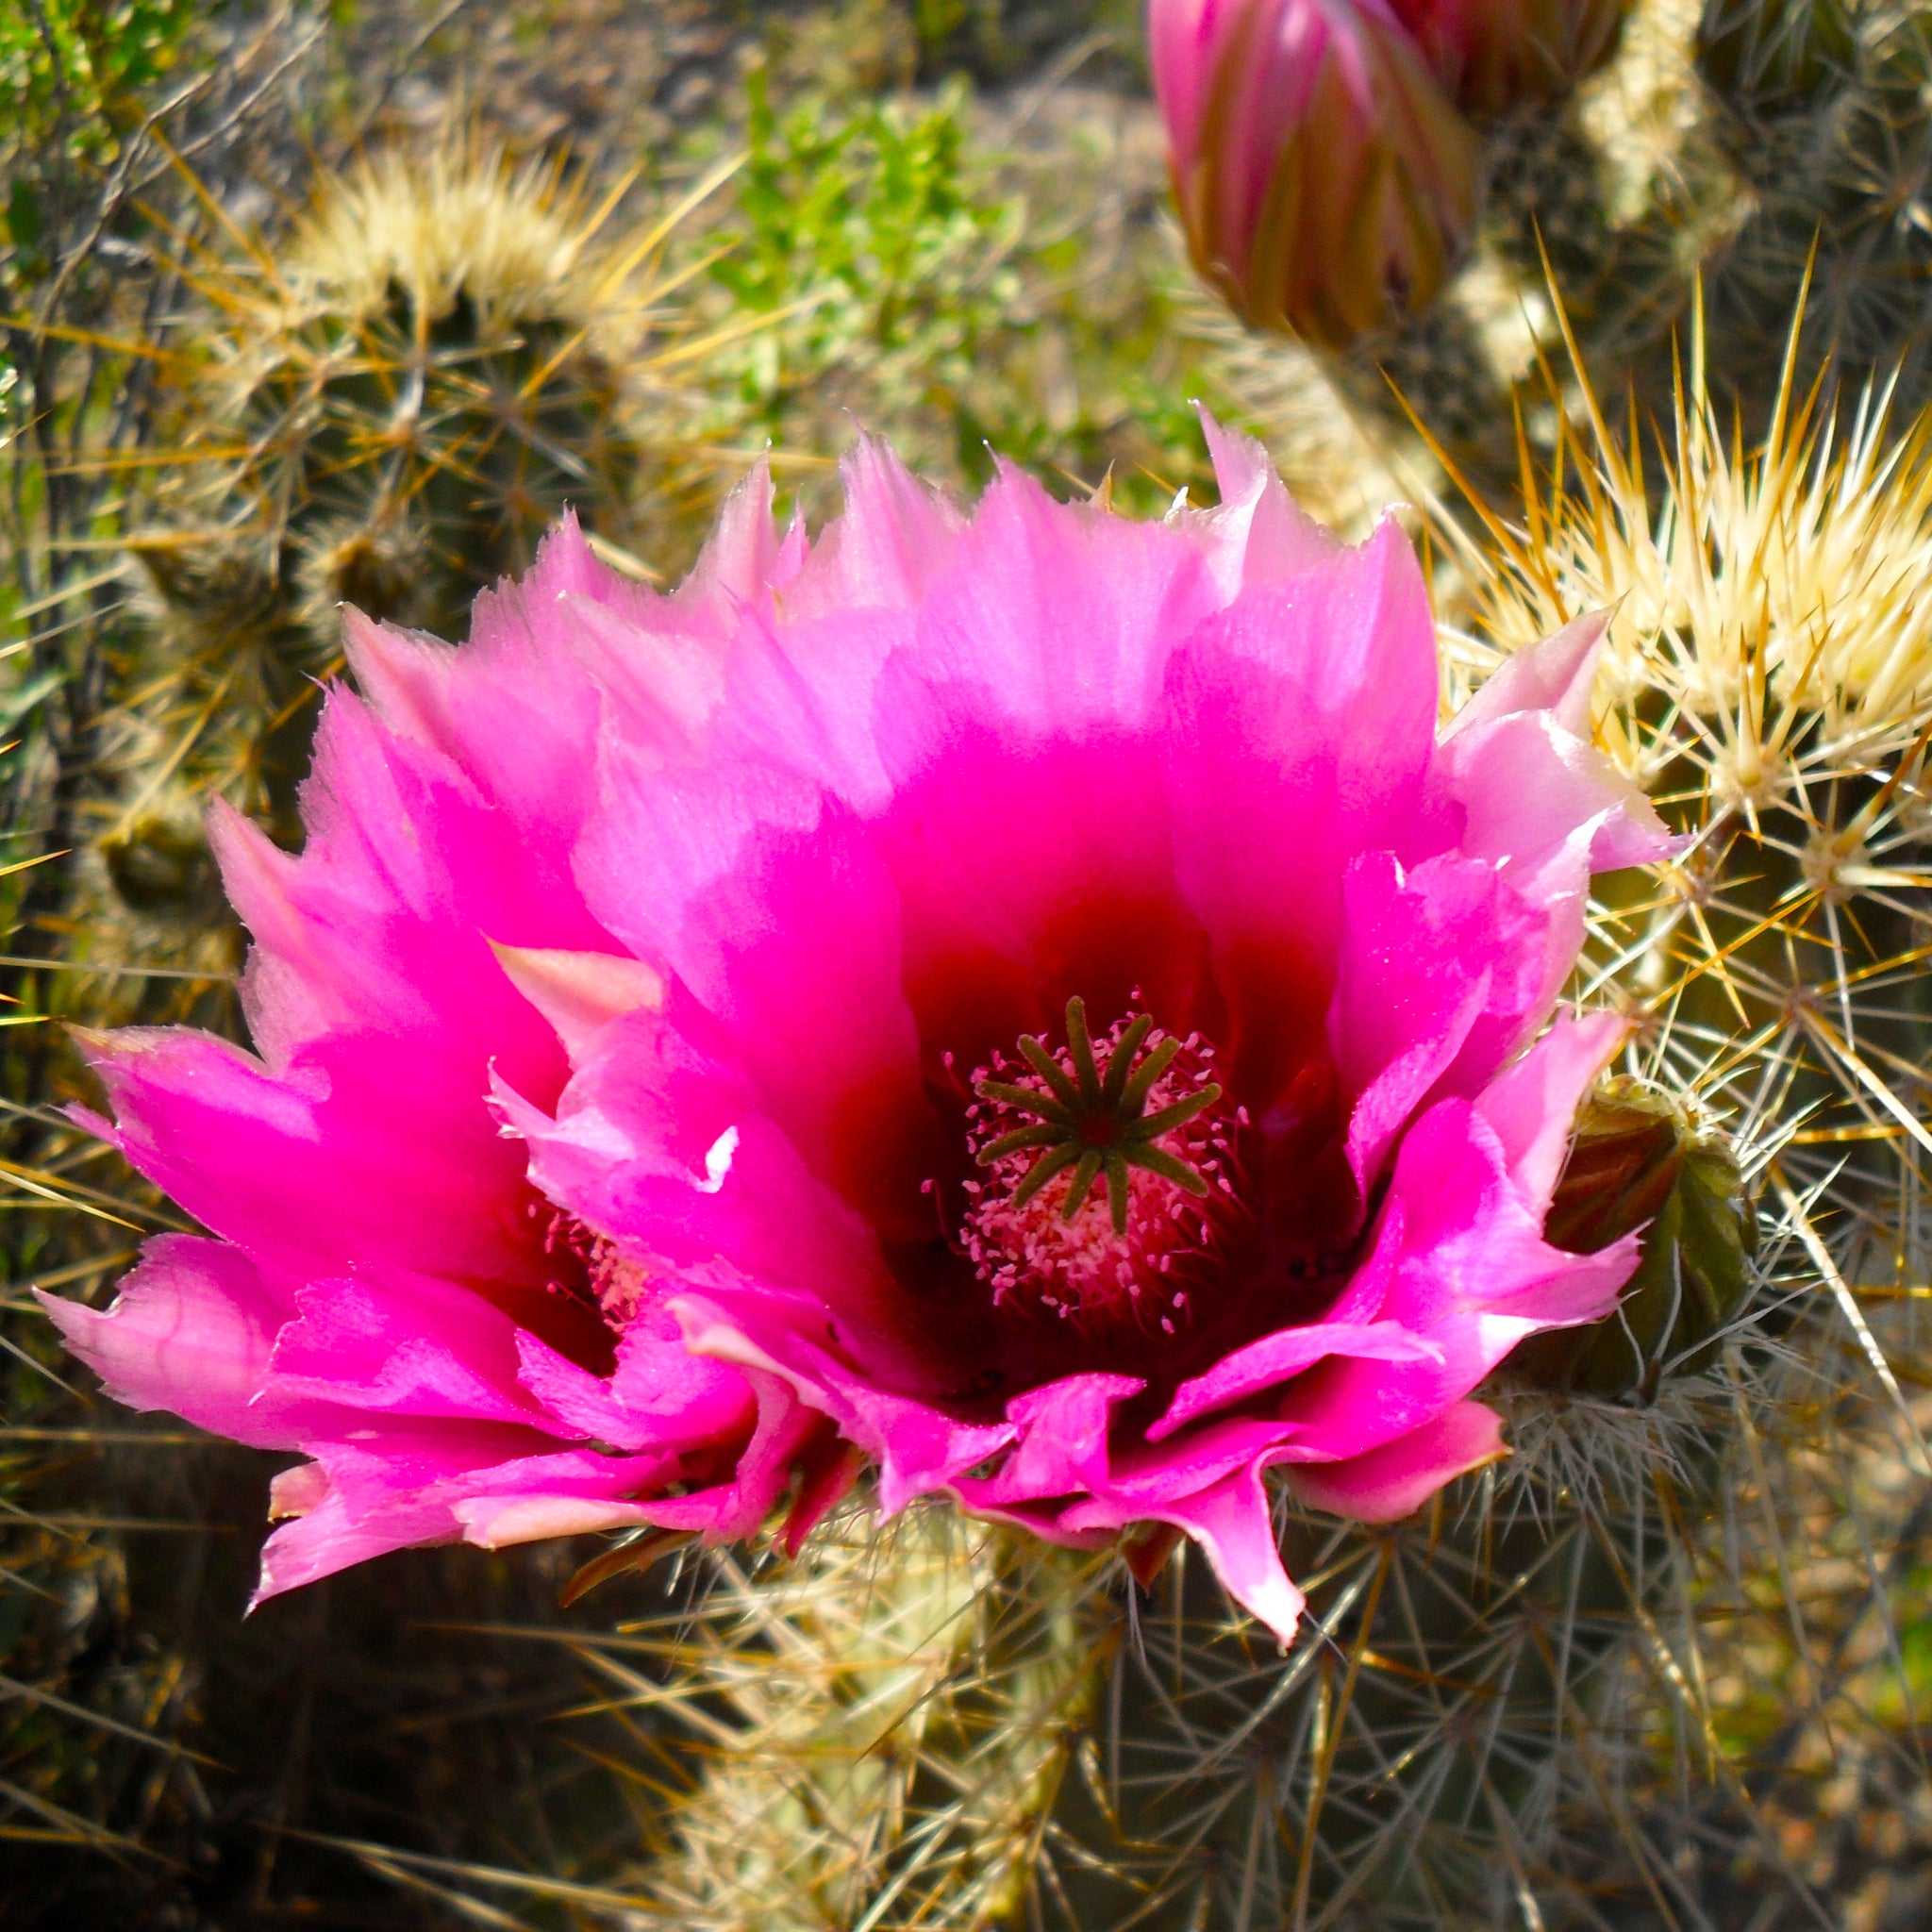 Hedgehog Cactus Seeds and Flowers